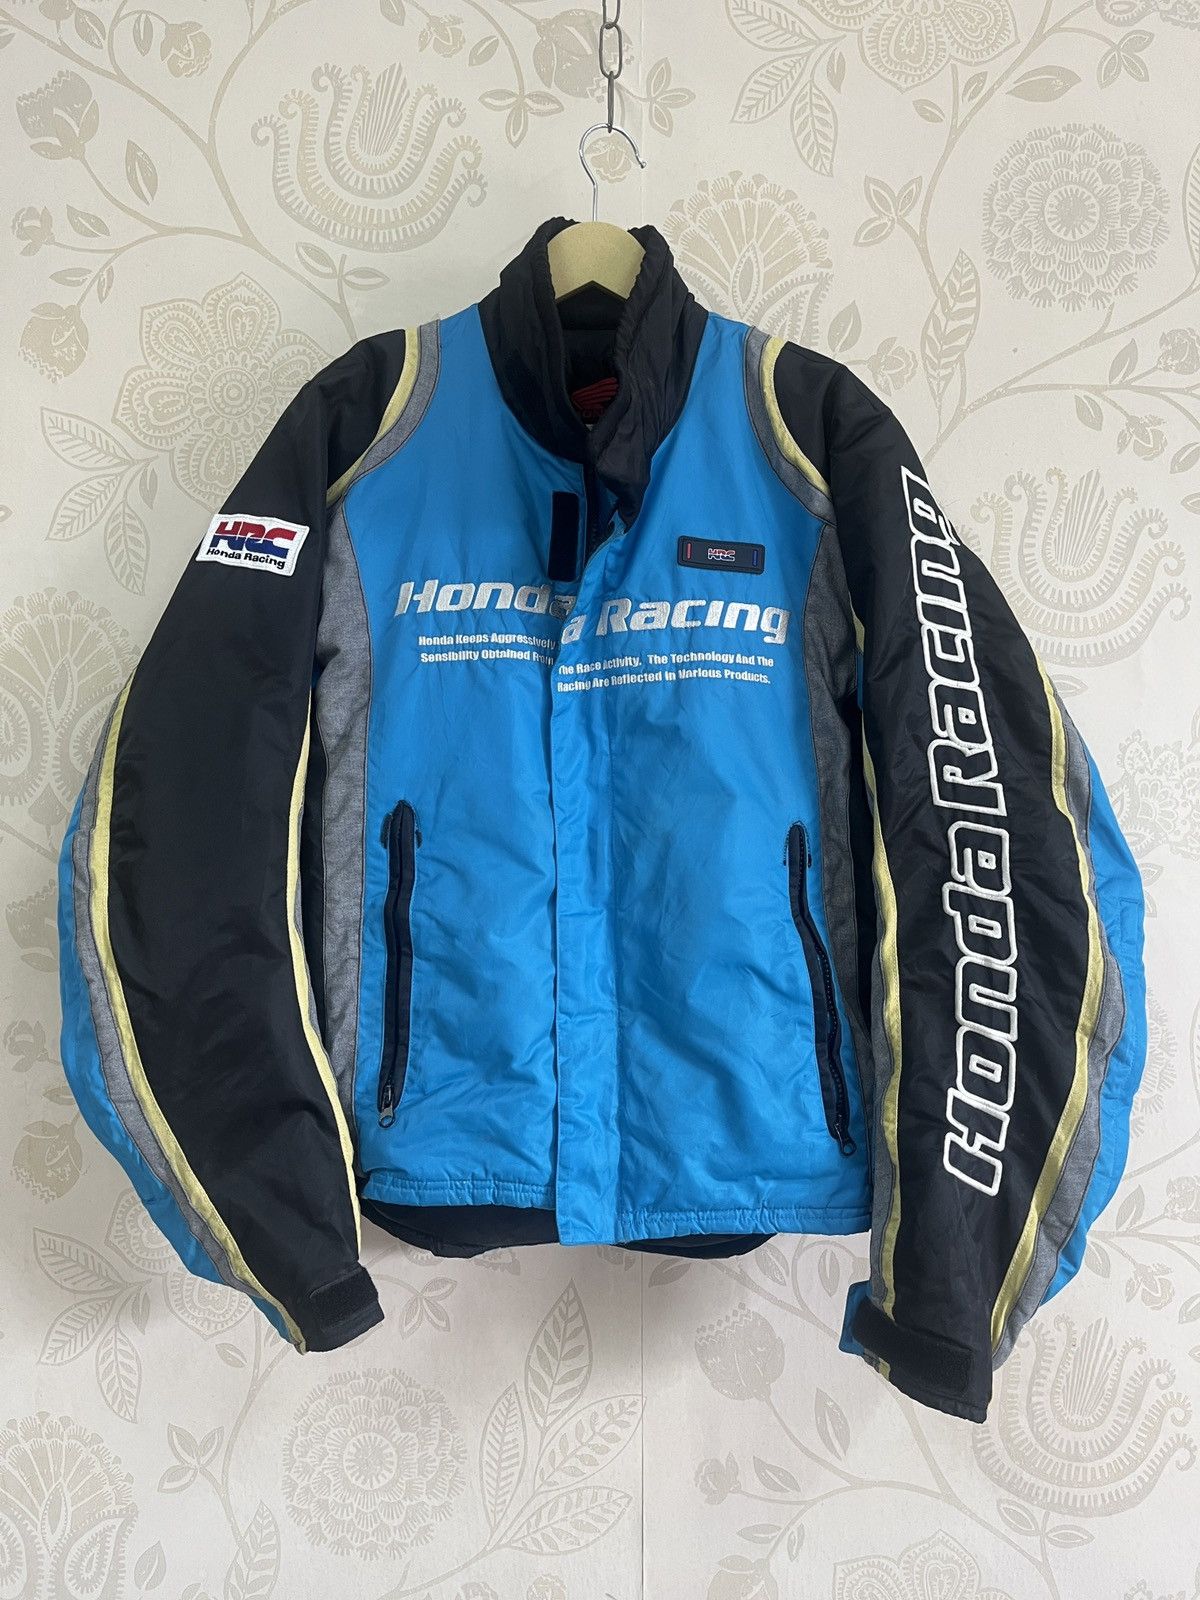 Sports Specialties - Honda Racing Jacket HRC Japan - 3